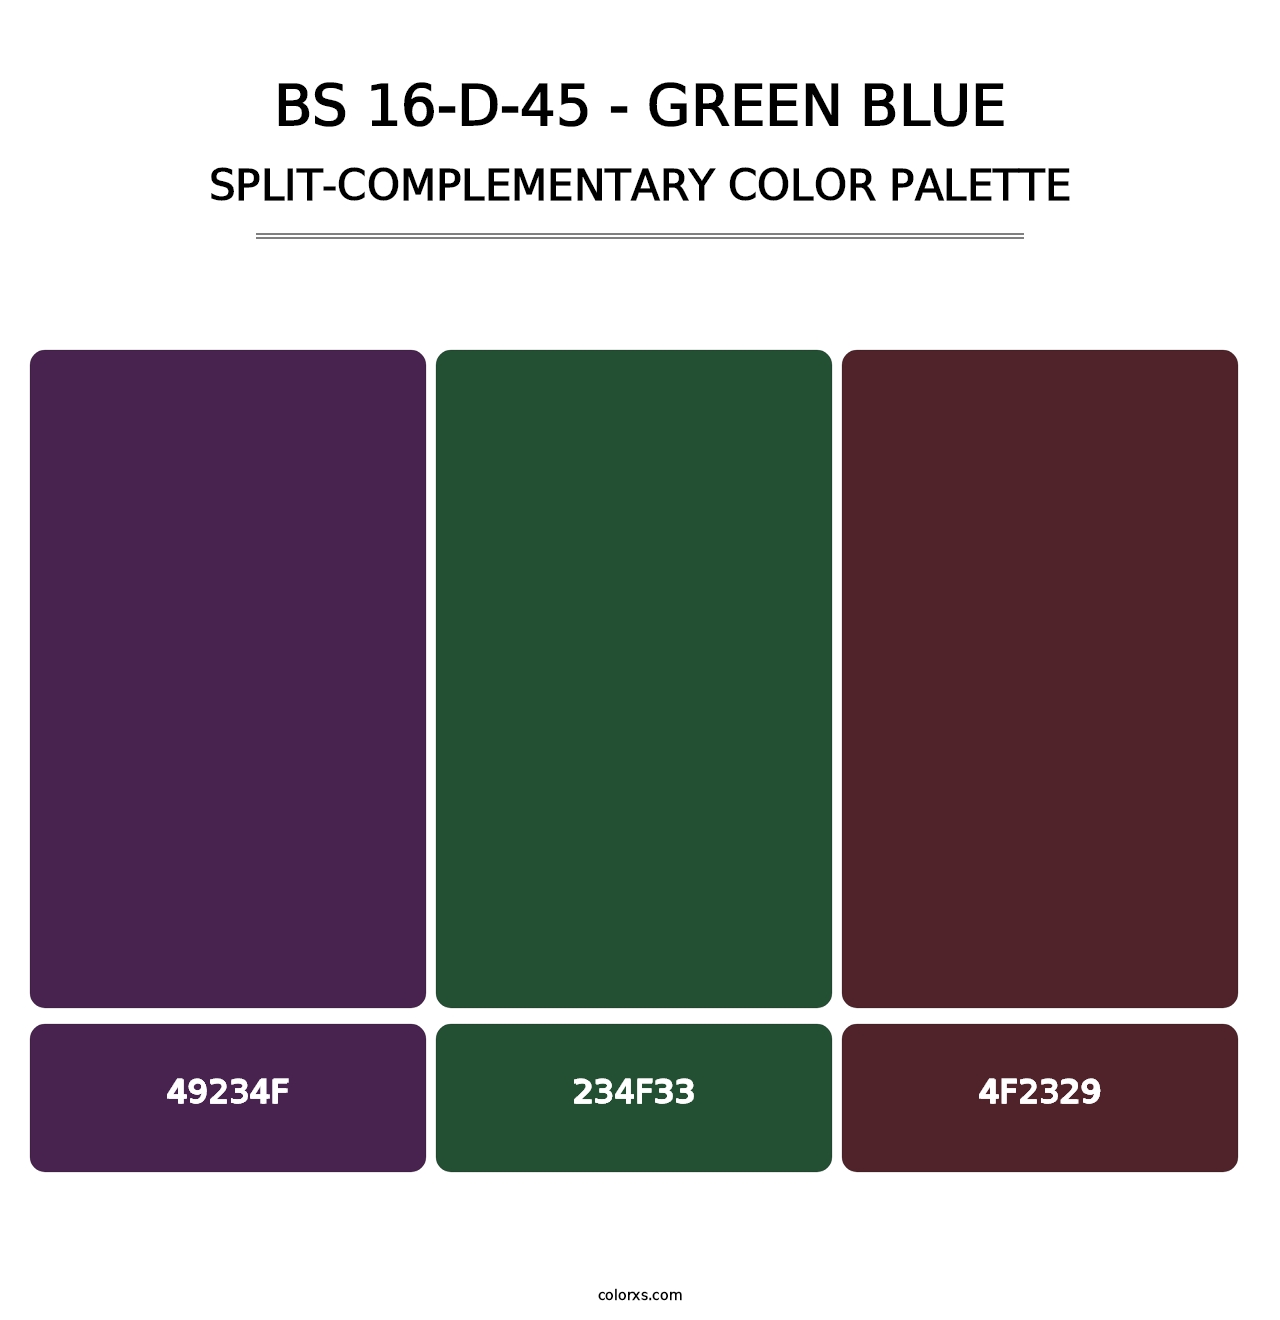 BS 16-D-45 - Green Blue - Split-Complementary Color Palette